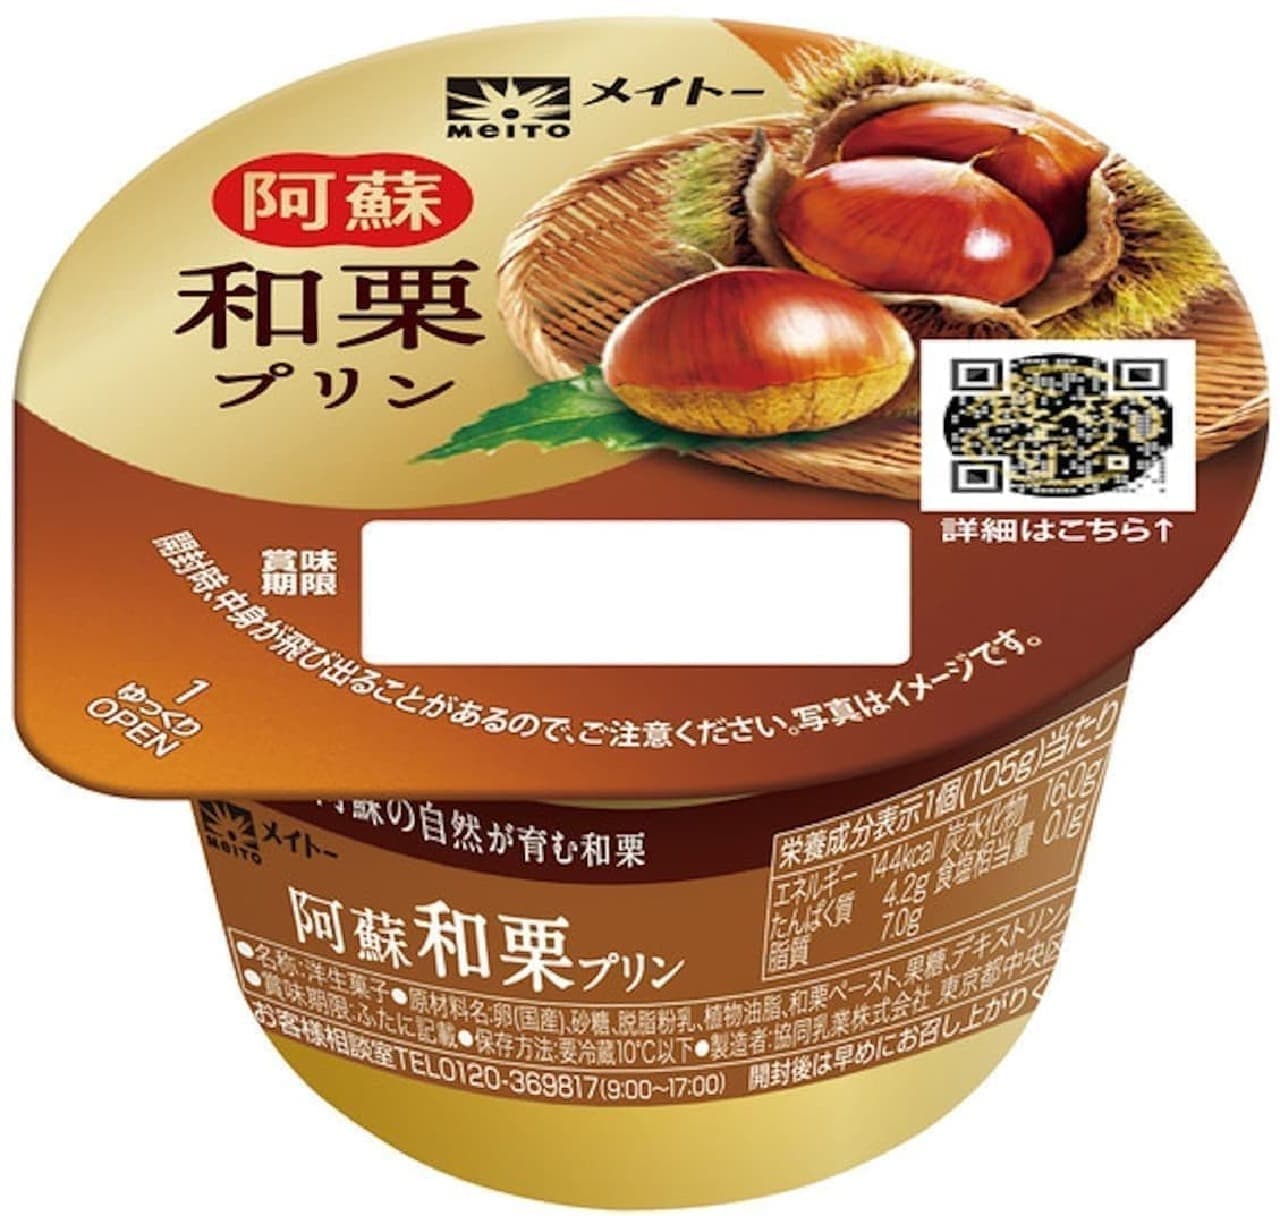 Kyodo Milk Industry "Aso Waguri Pudding"